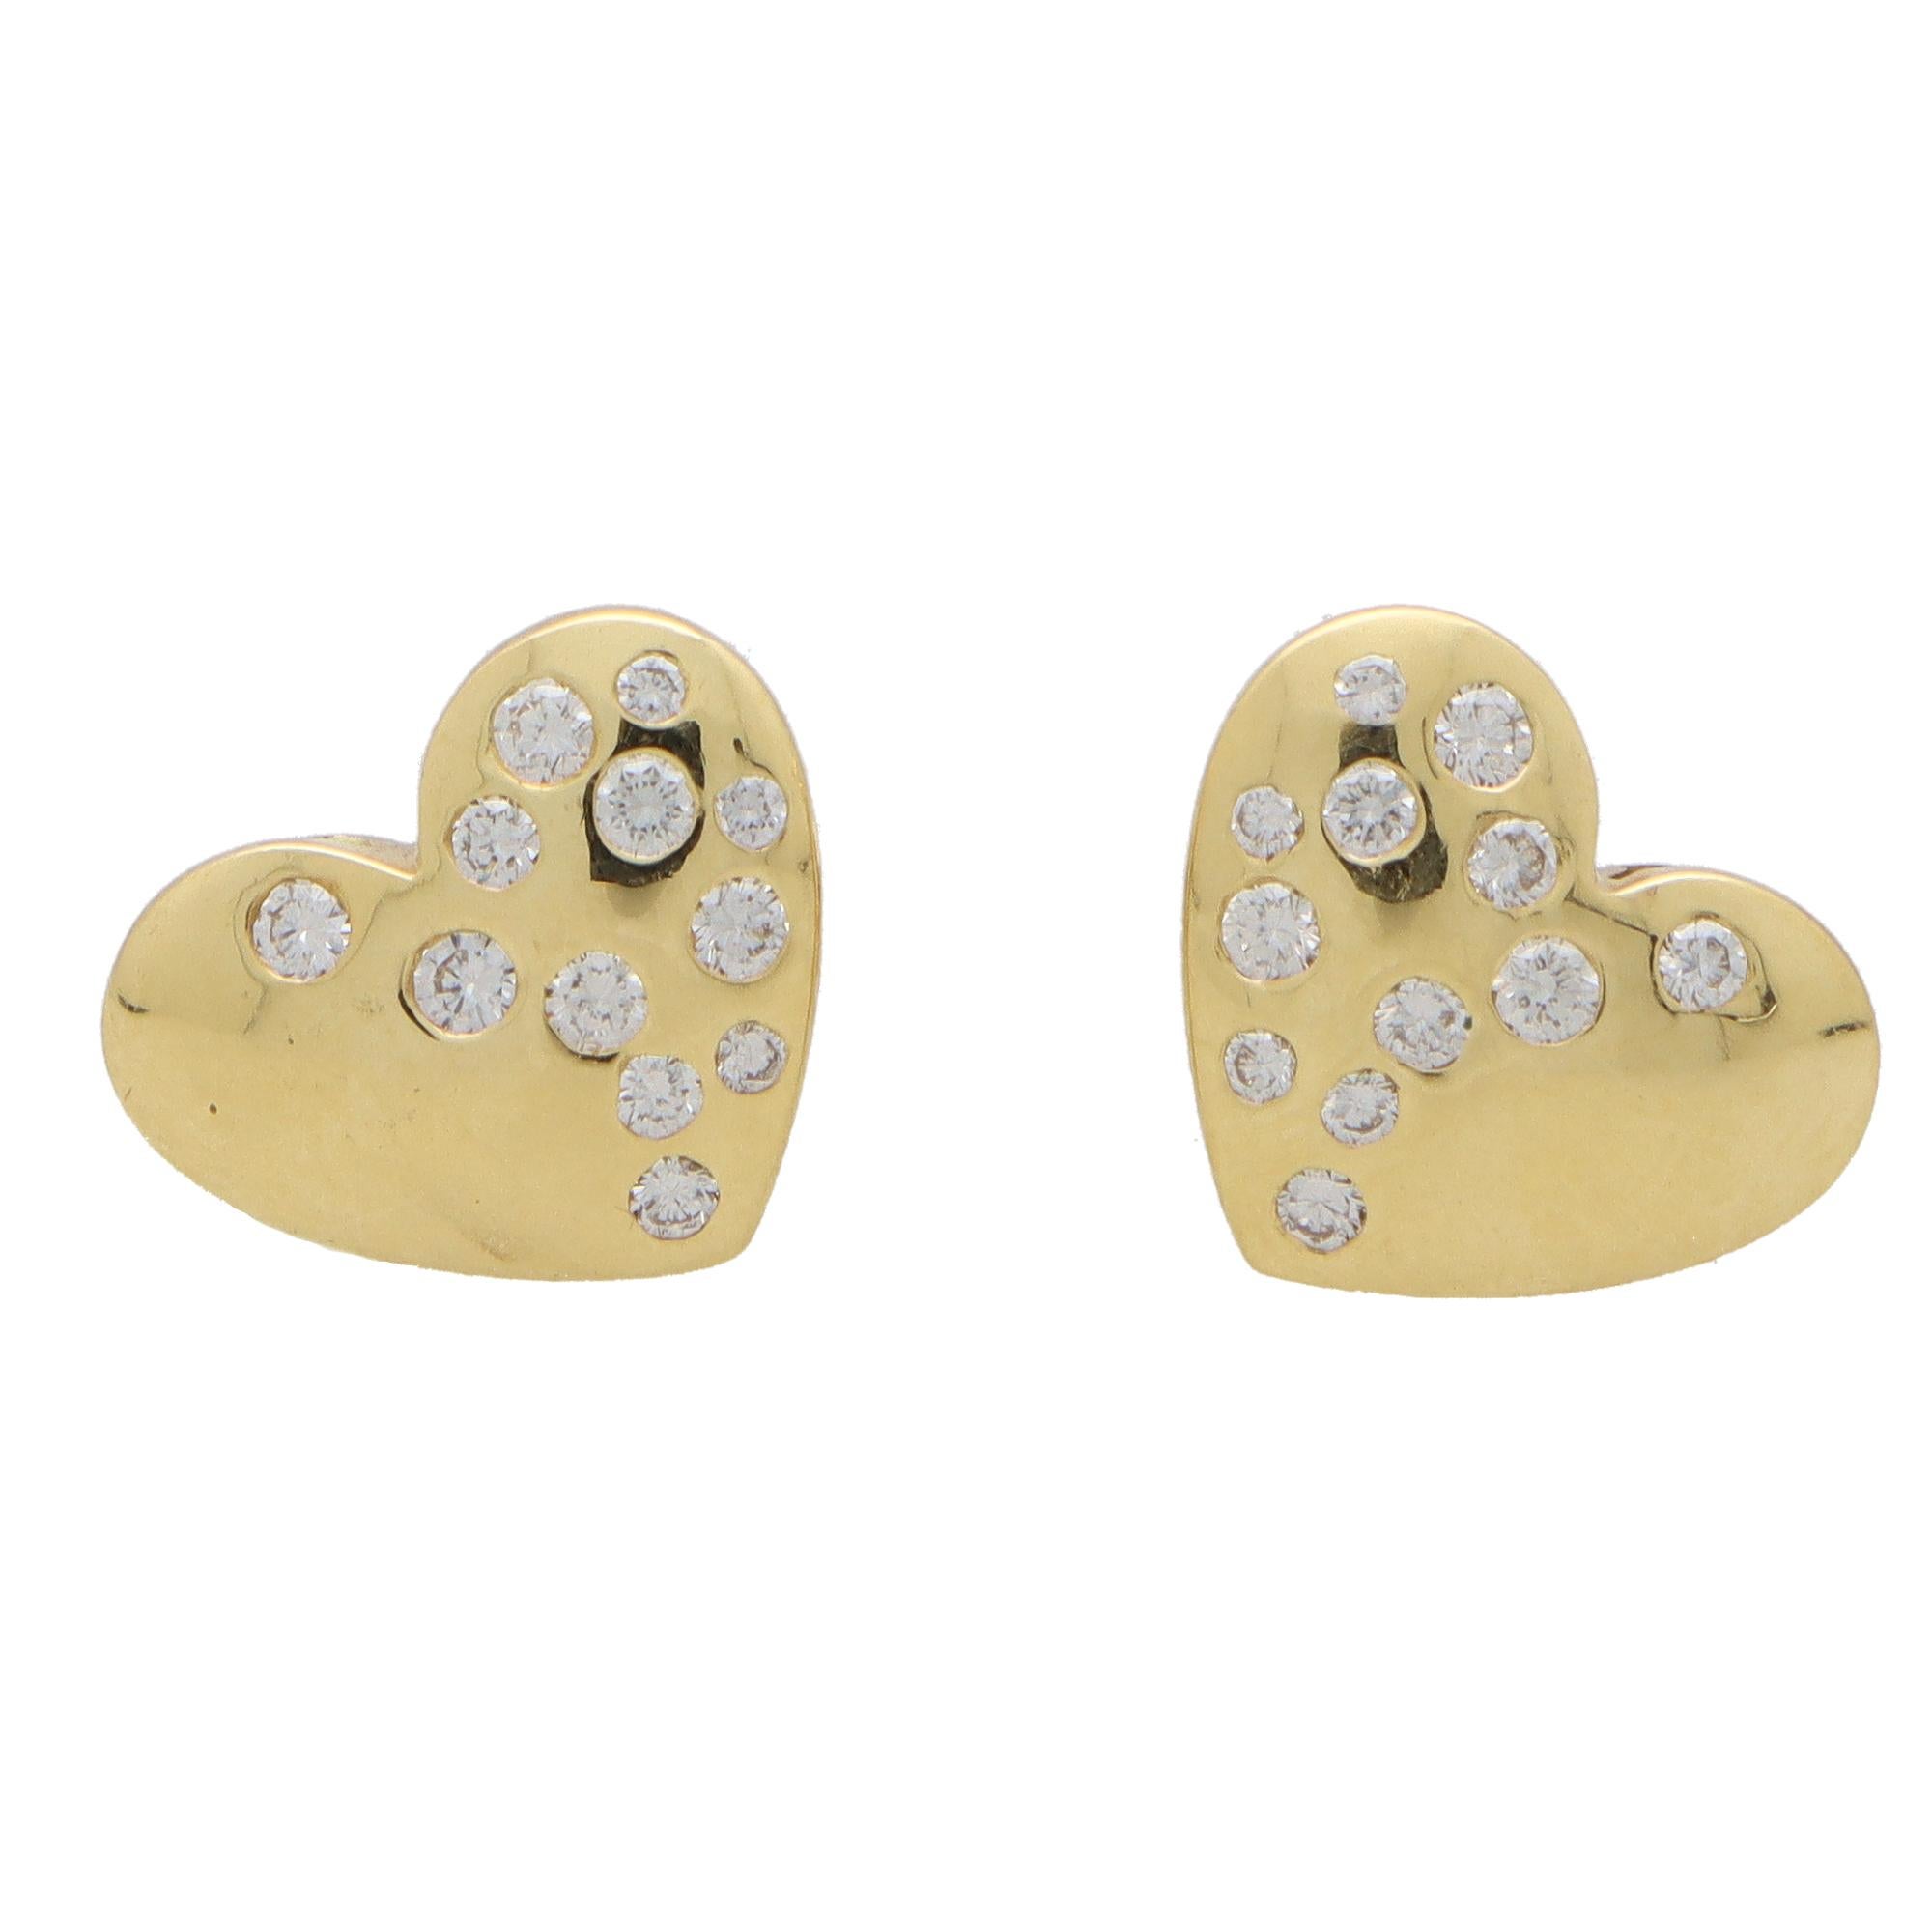 Modern Contemporary Diamond Heart Large Stud Earrings in 18k Yellow Gold